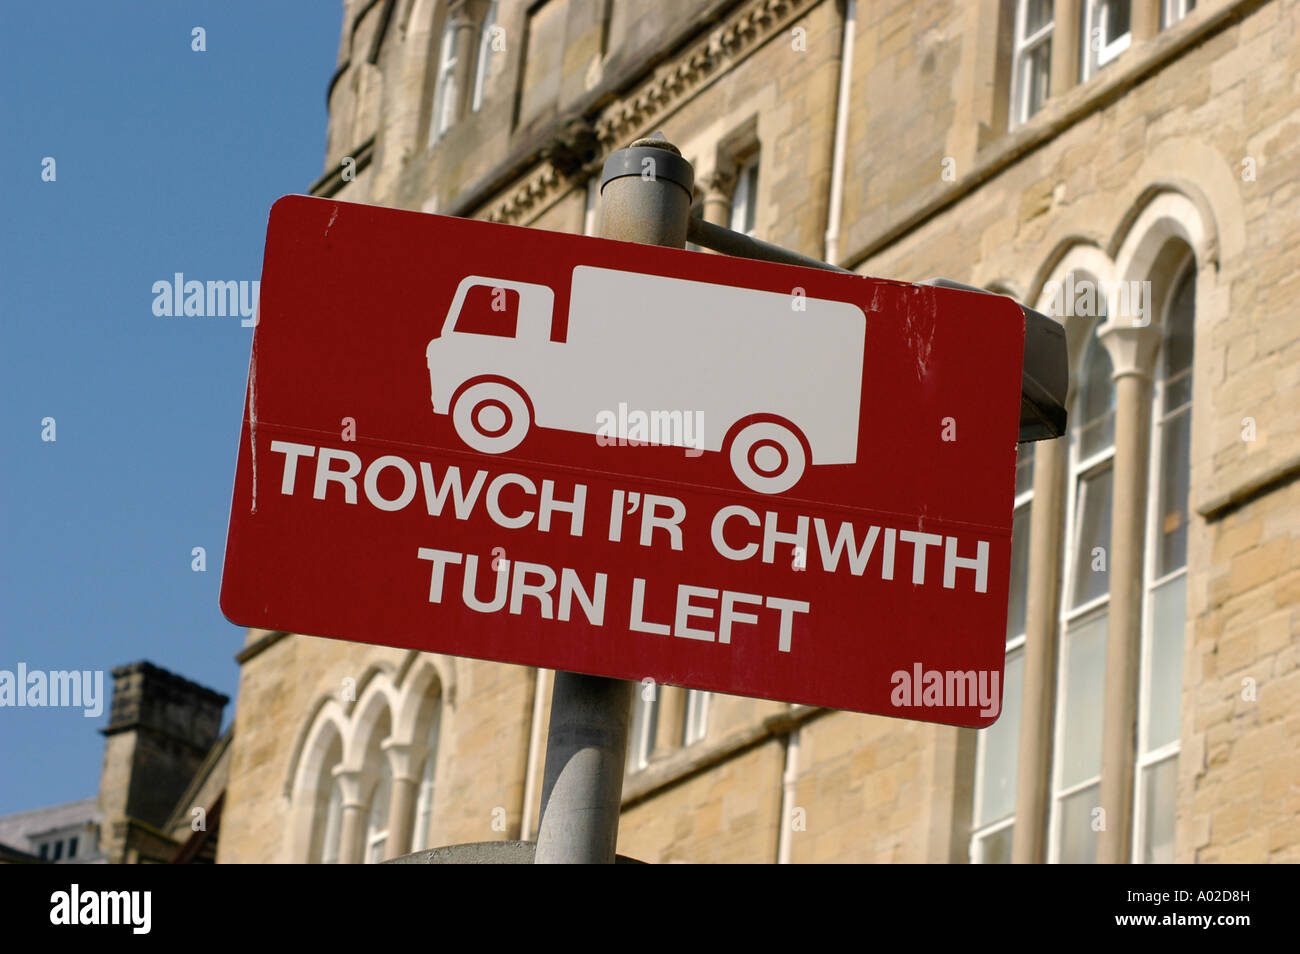 Aberystwyth bilingue inglese gallese girare a sinistra in strada segno [Trowch i'r Chwith] con icona del carrello, Wales UK Foto Stock